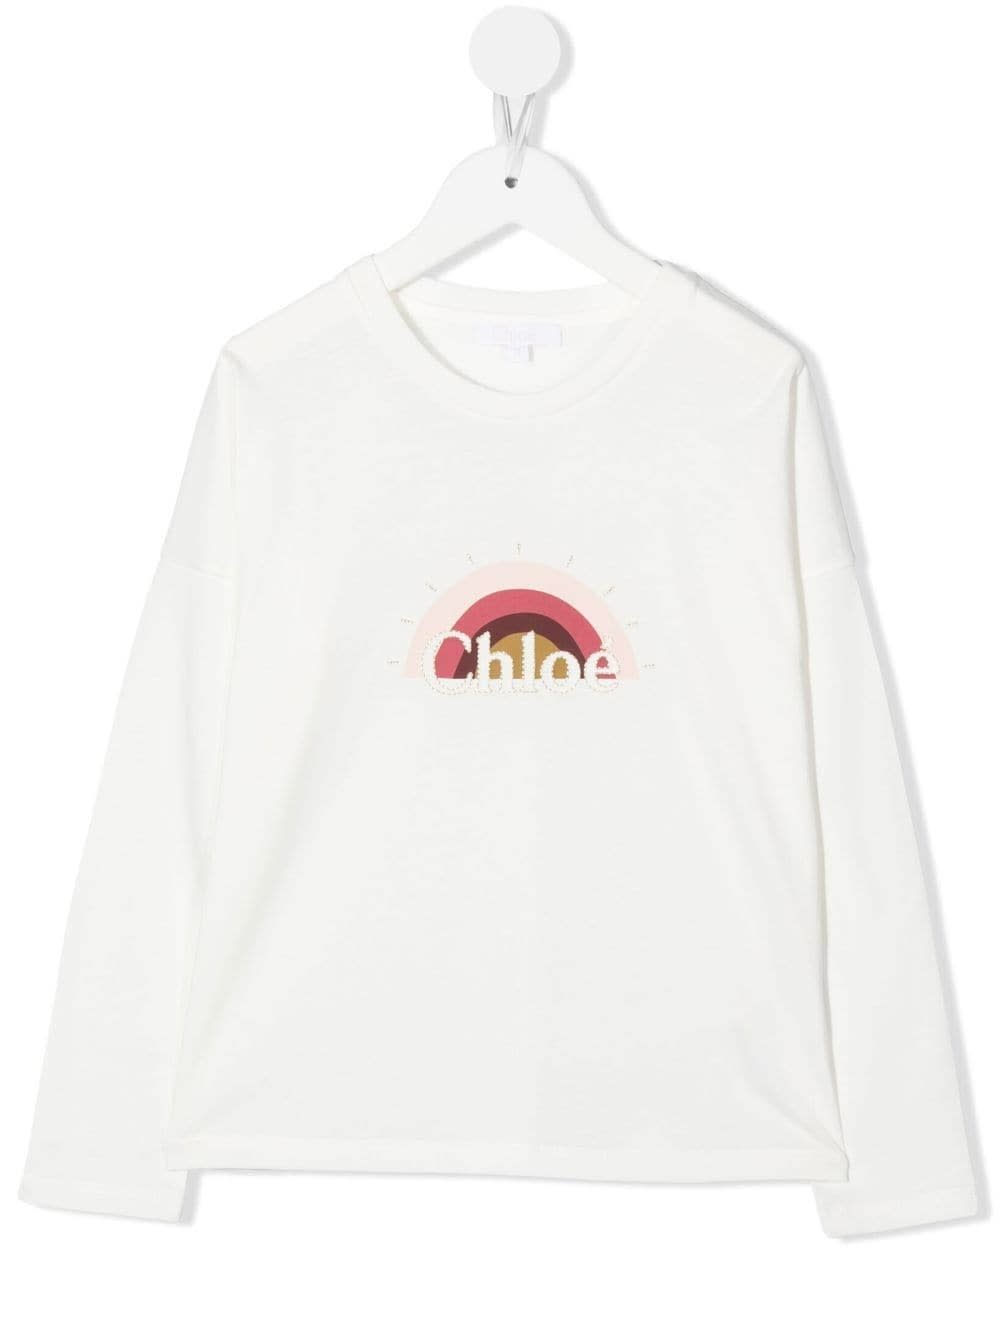 Chloé Kids White Long Sleeve T-shirt With Logo And Rainbow Print